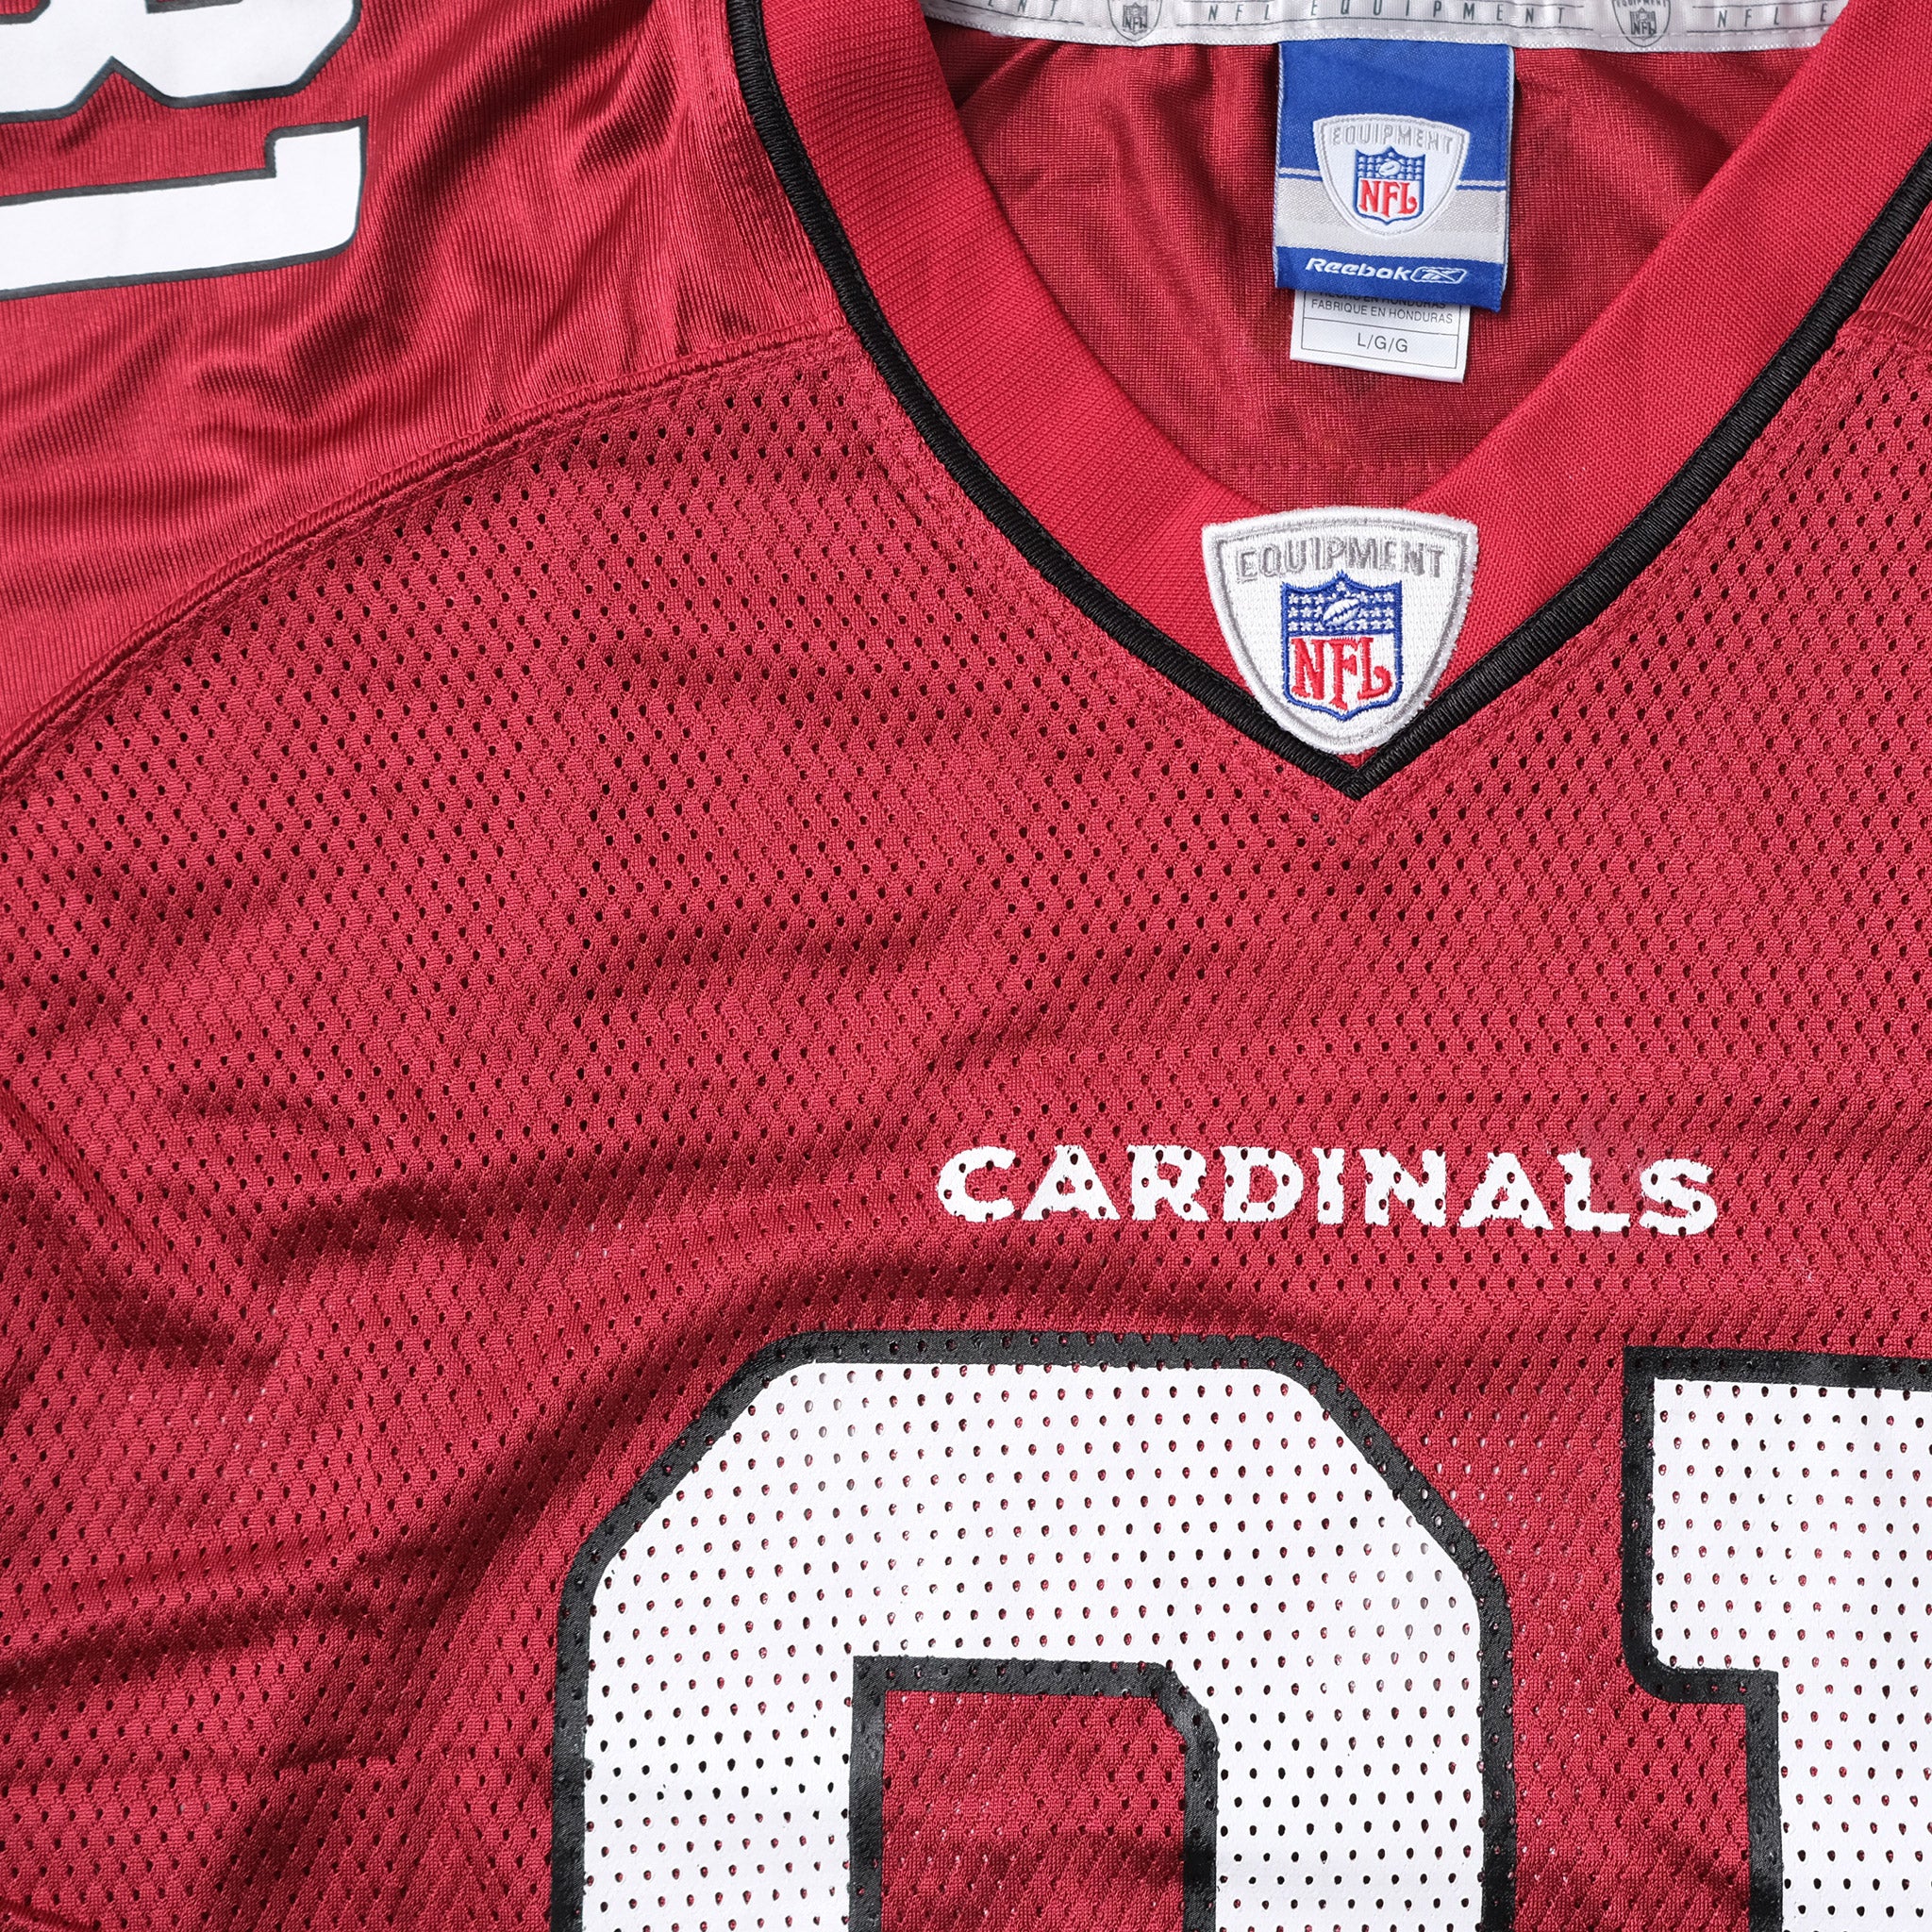 Mens XL Team Arizona Cardinals 00 Reebok Engineered Authentic Jersey NFL